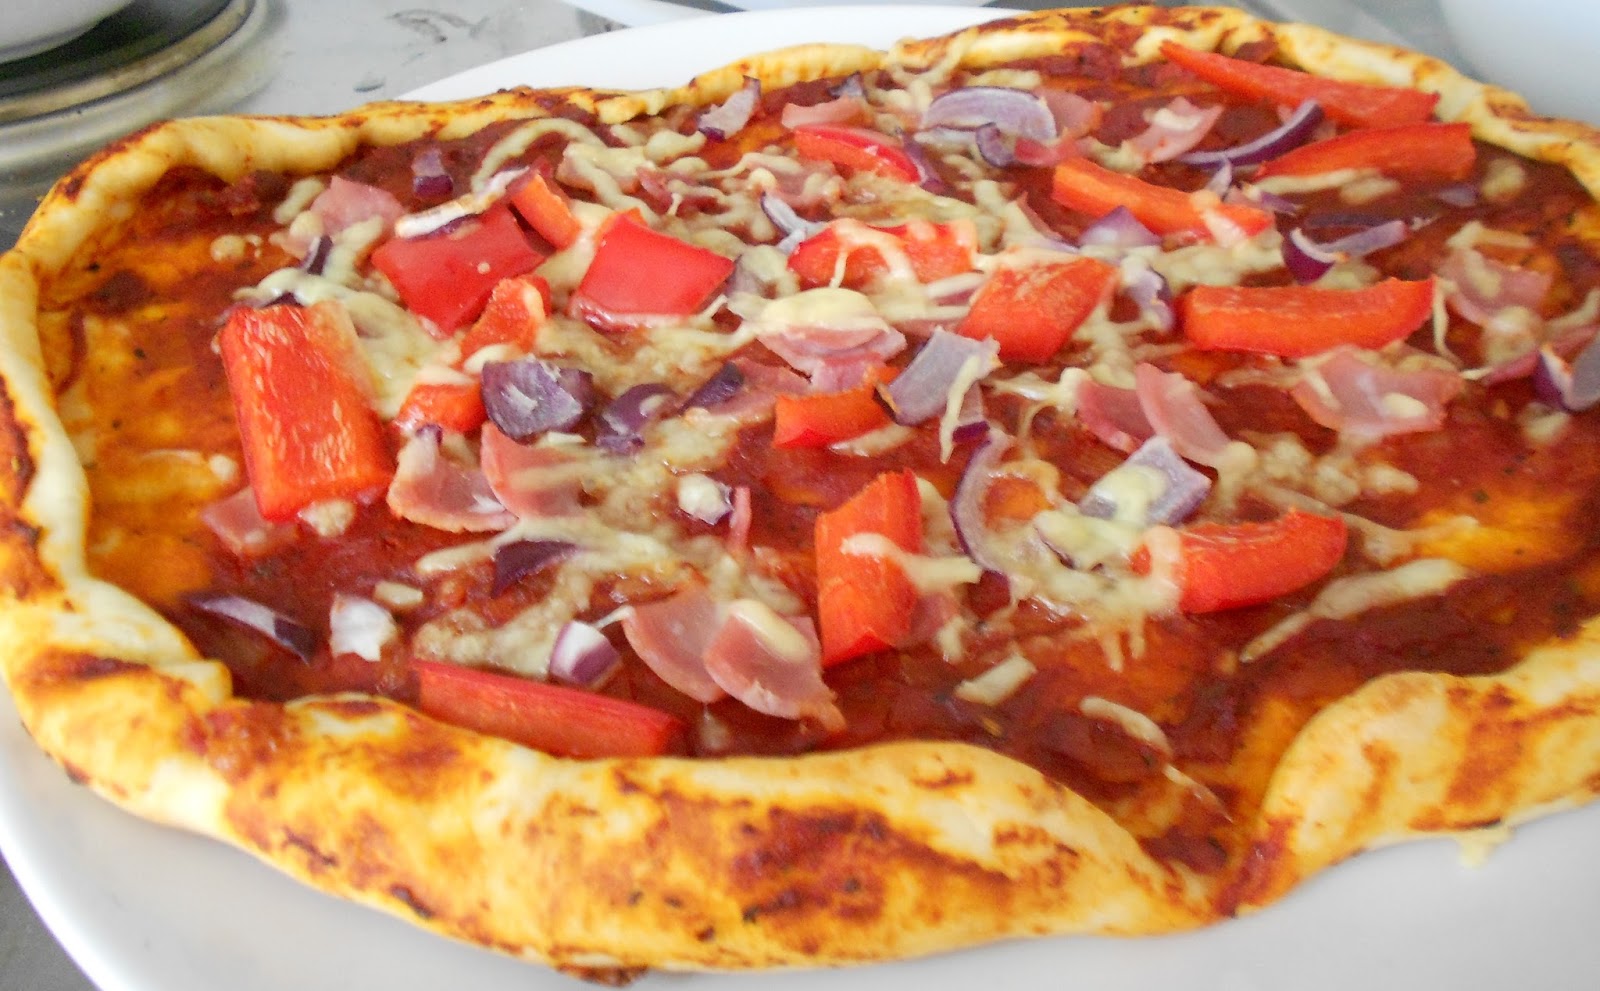 bela devojka: Pizza - komplett selbst gemacht